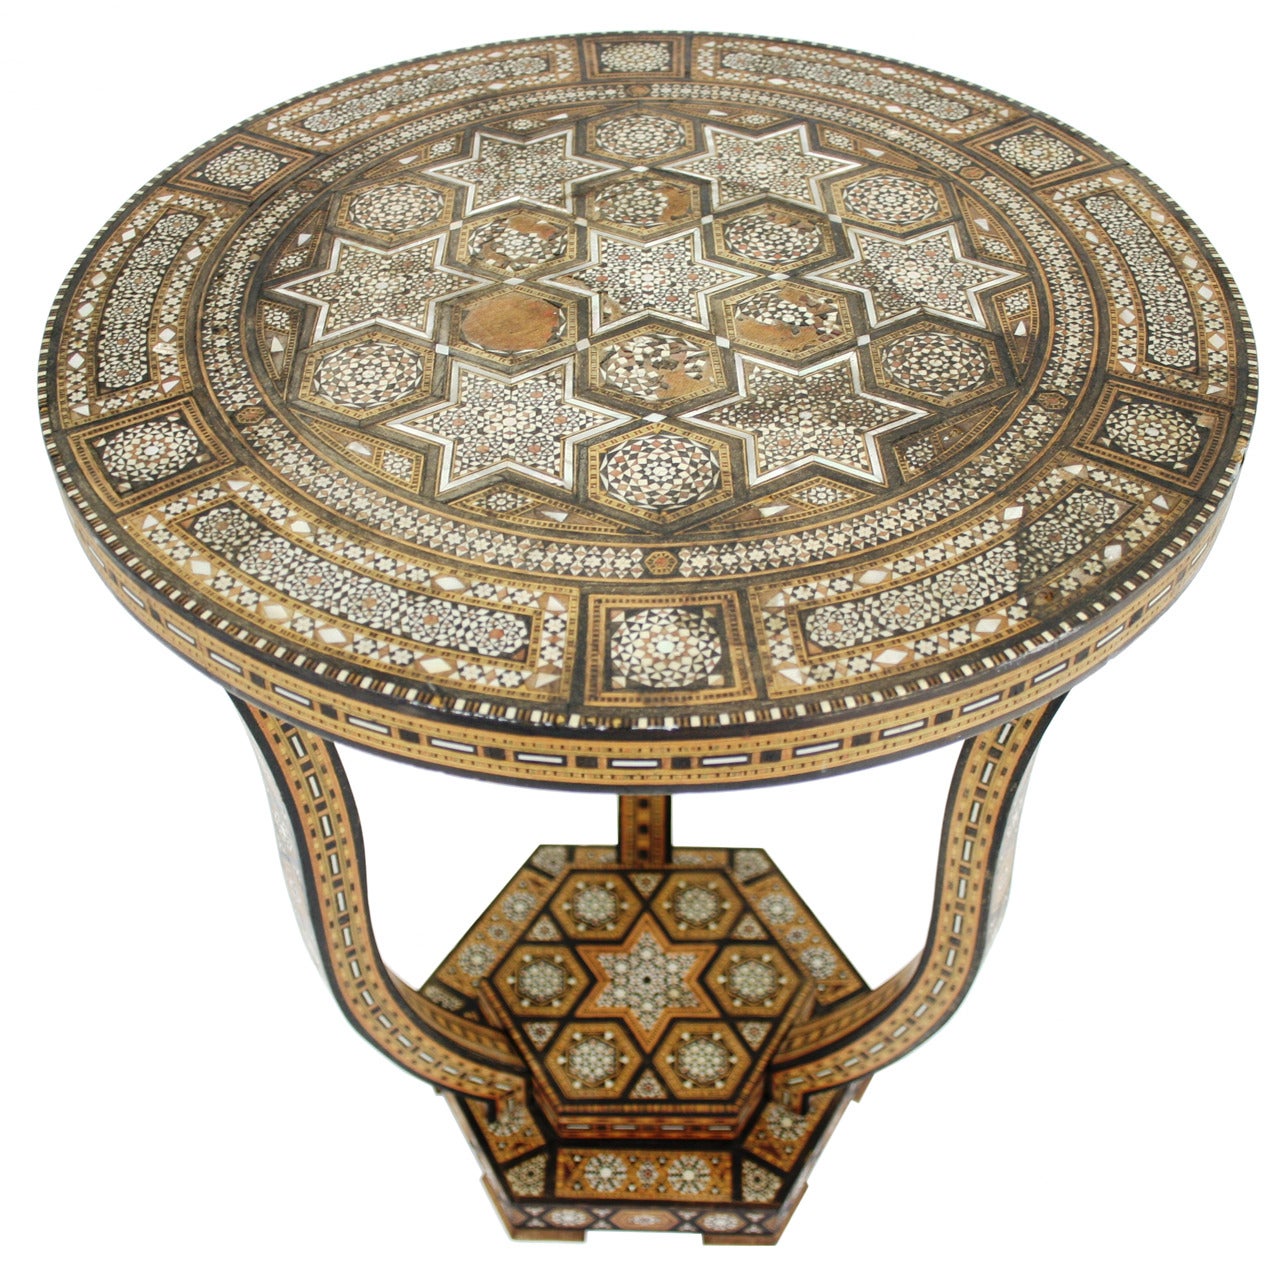 19th Century Syrian Inlaid Table on Tripod Base